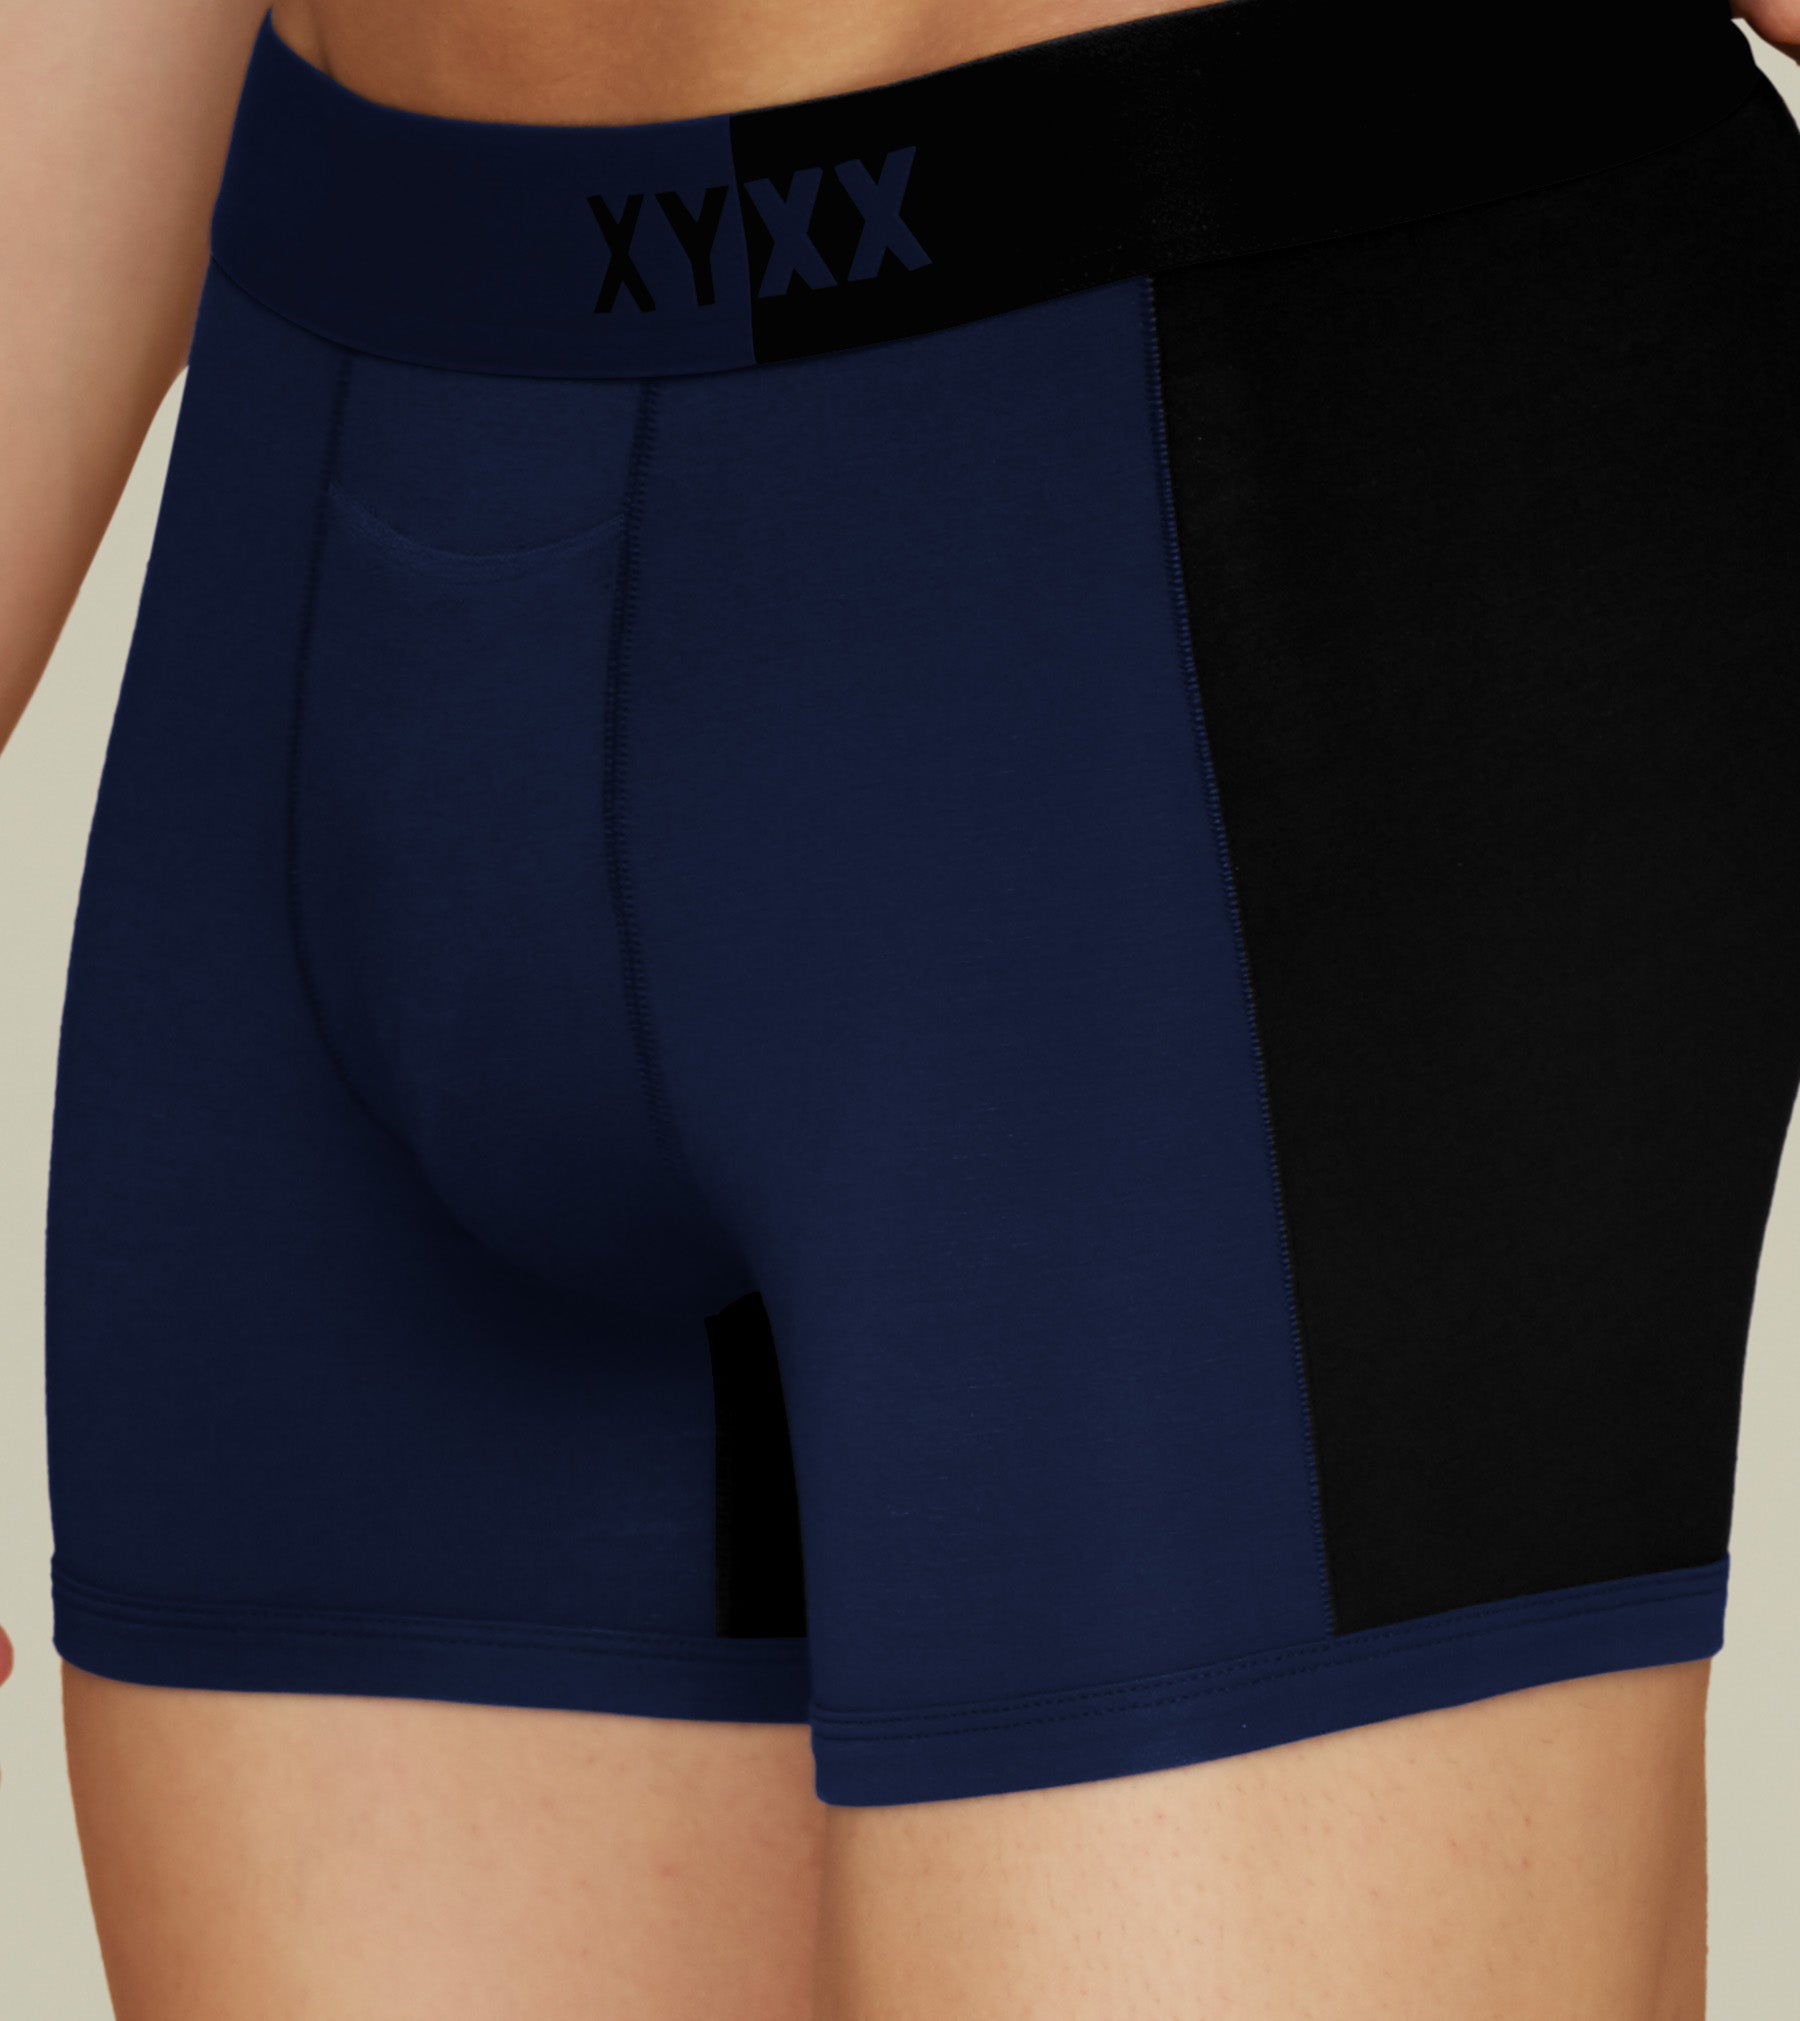 Dualist Modal Trunks For Men Pack of 3 (Aqua Blue, Lime Yellow, Dark Blue) -  XYXX Mens Apparels